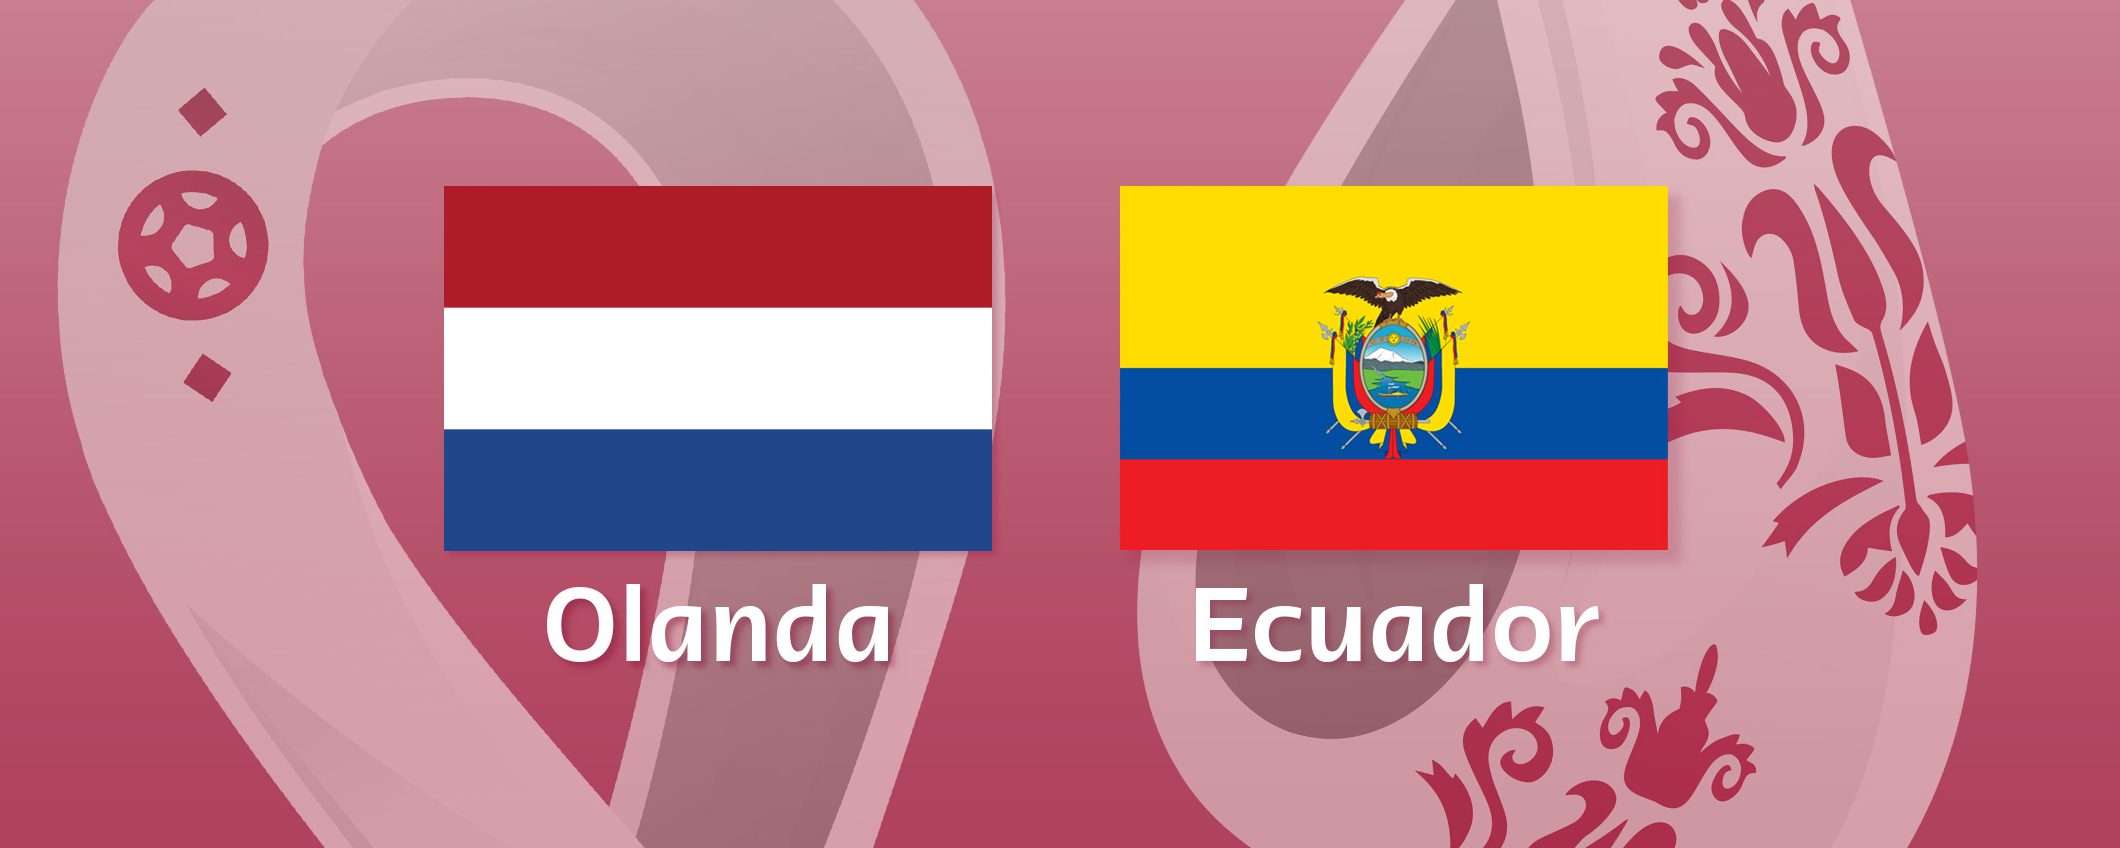 Come vedere Olanda-Ecuador in streaming (Mondiali)